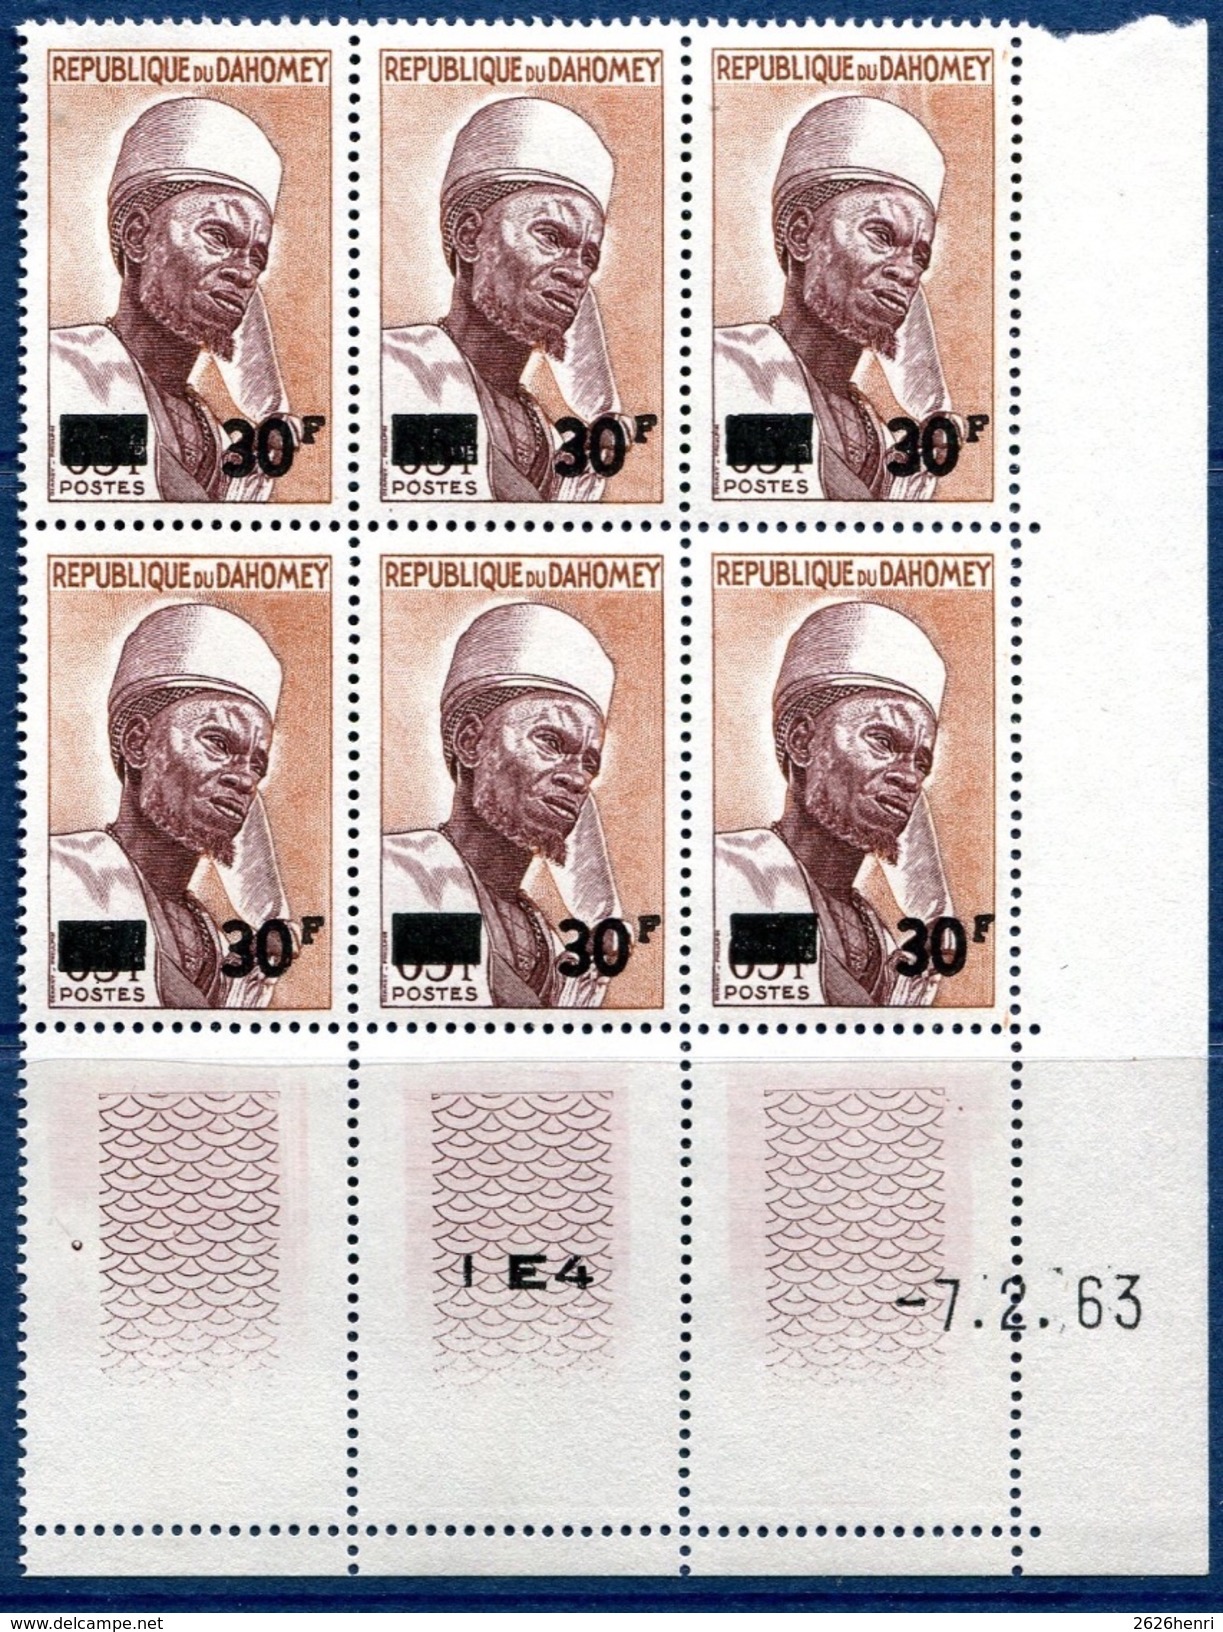 Dahomey,  lot coins datés 1963/1966, neufs**